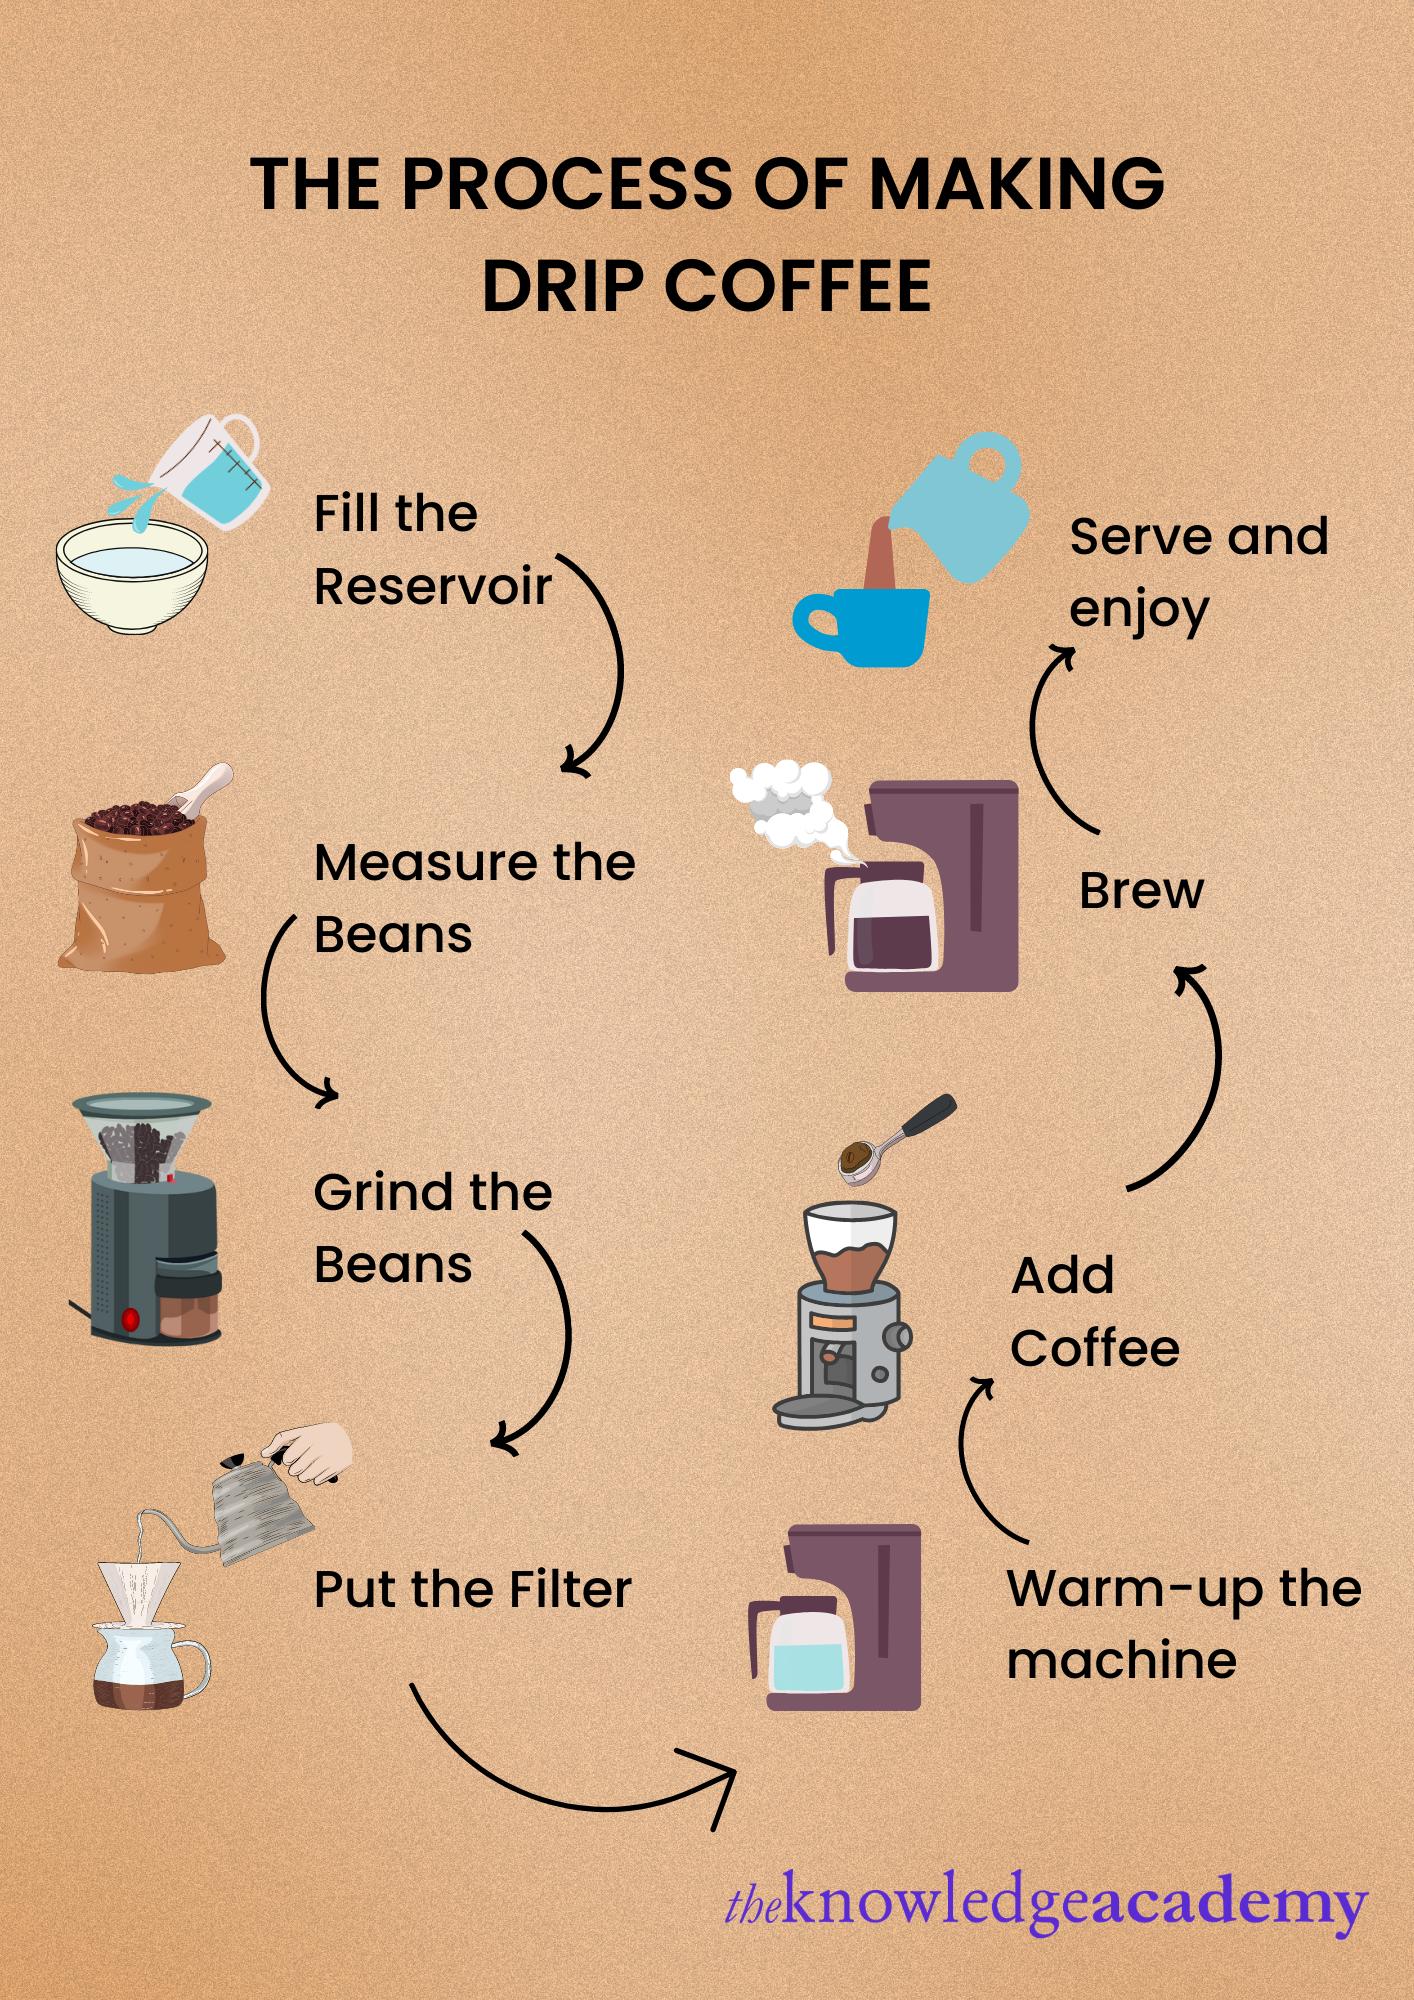 How to make a Drip Coffee?